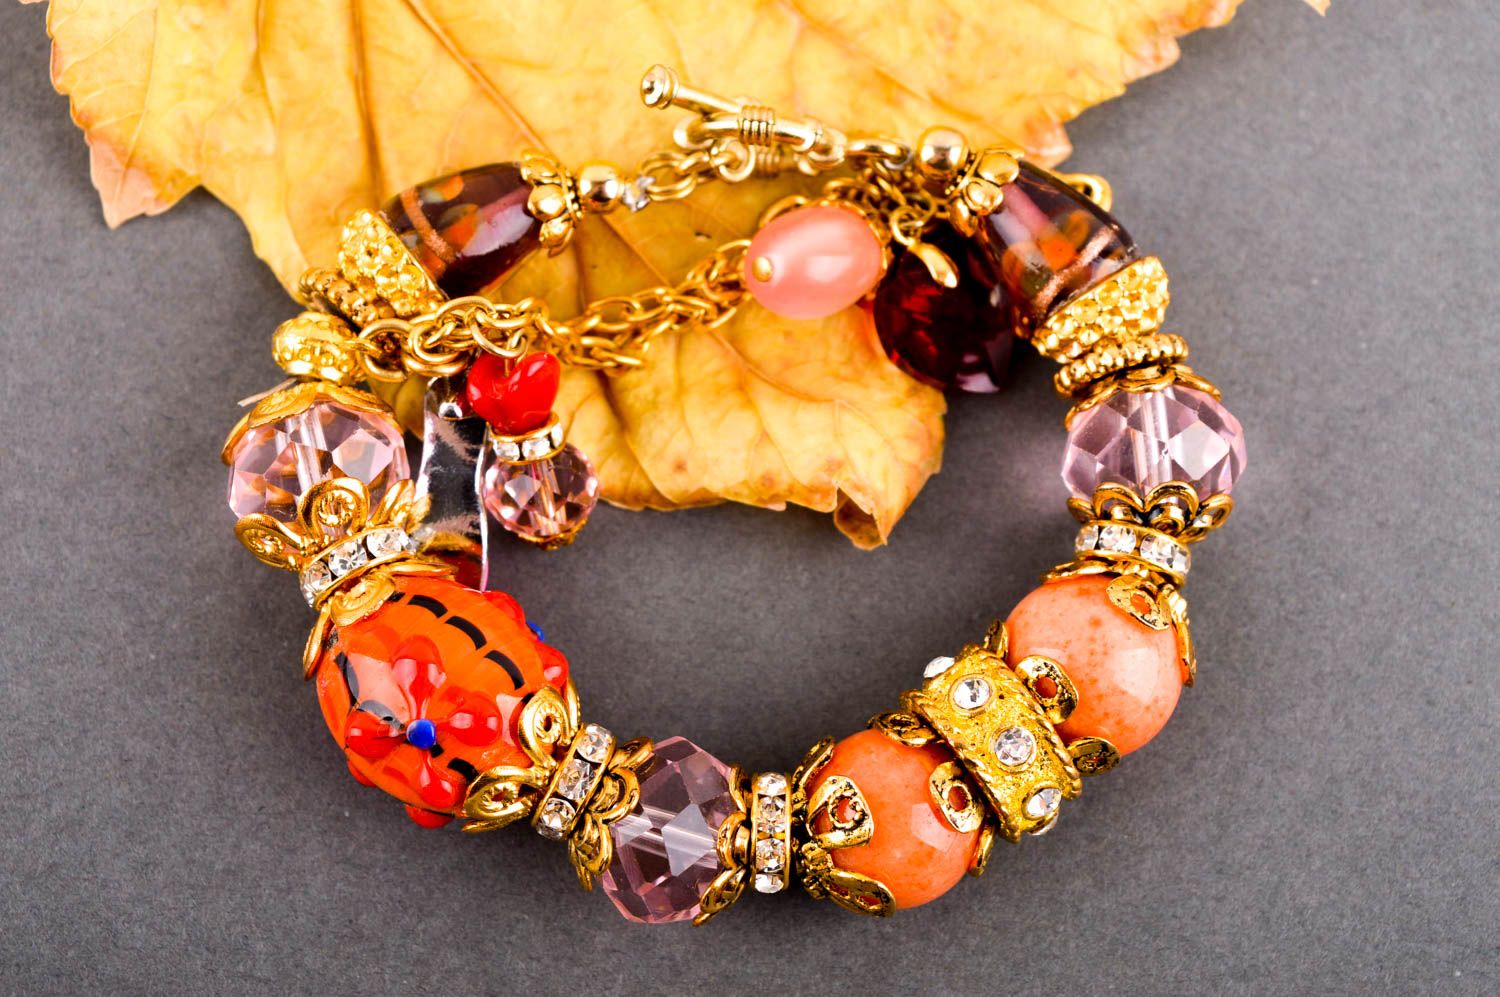 Handmade bracelet with natural stones designer stone jewelry fashion jewelry photo 1